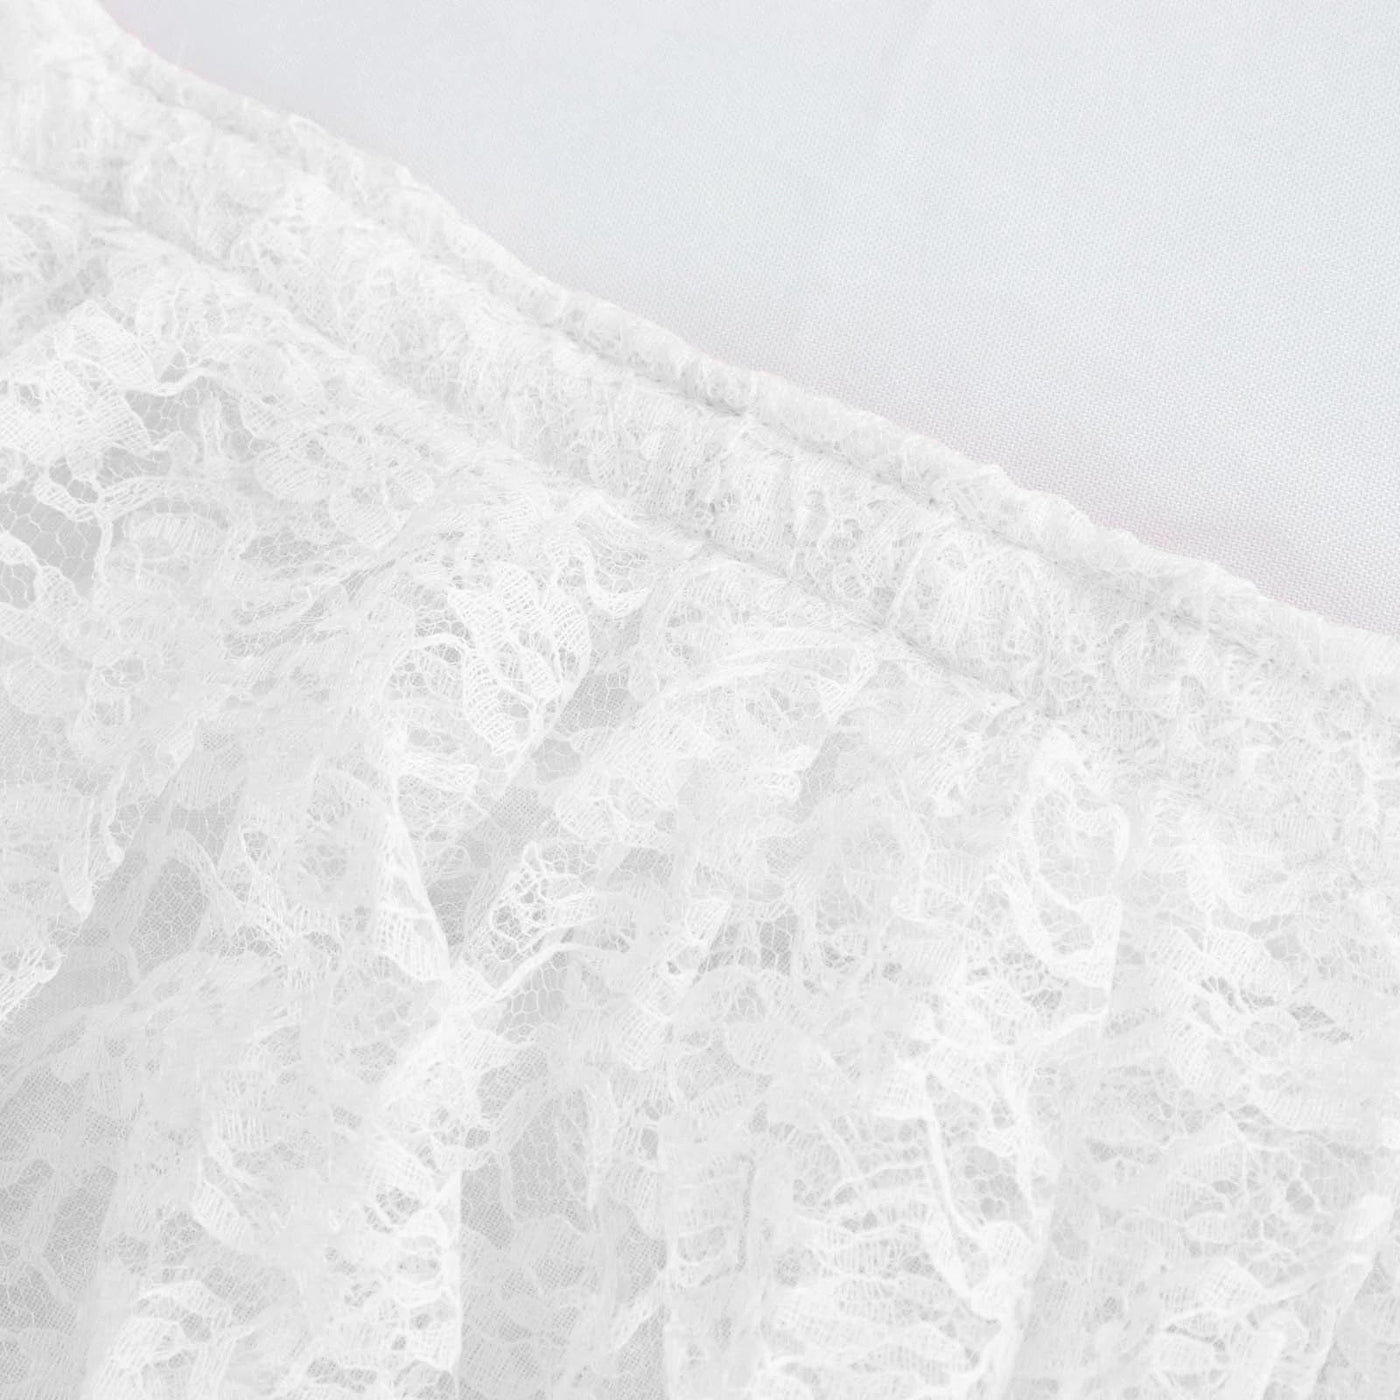 14ft White Premium Pleated Lace Table Skirt | eFavormart.com